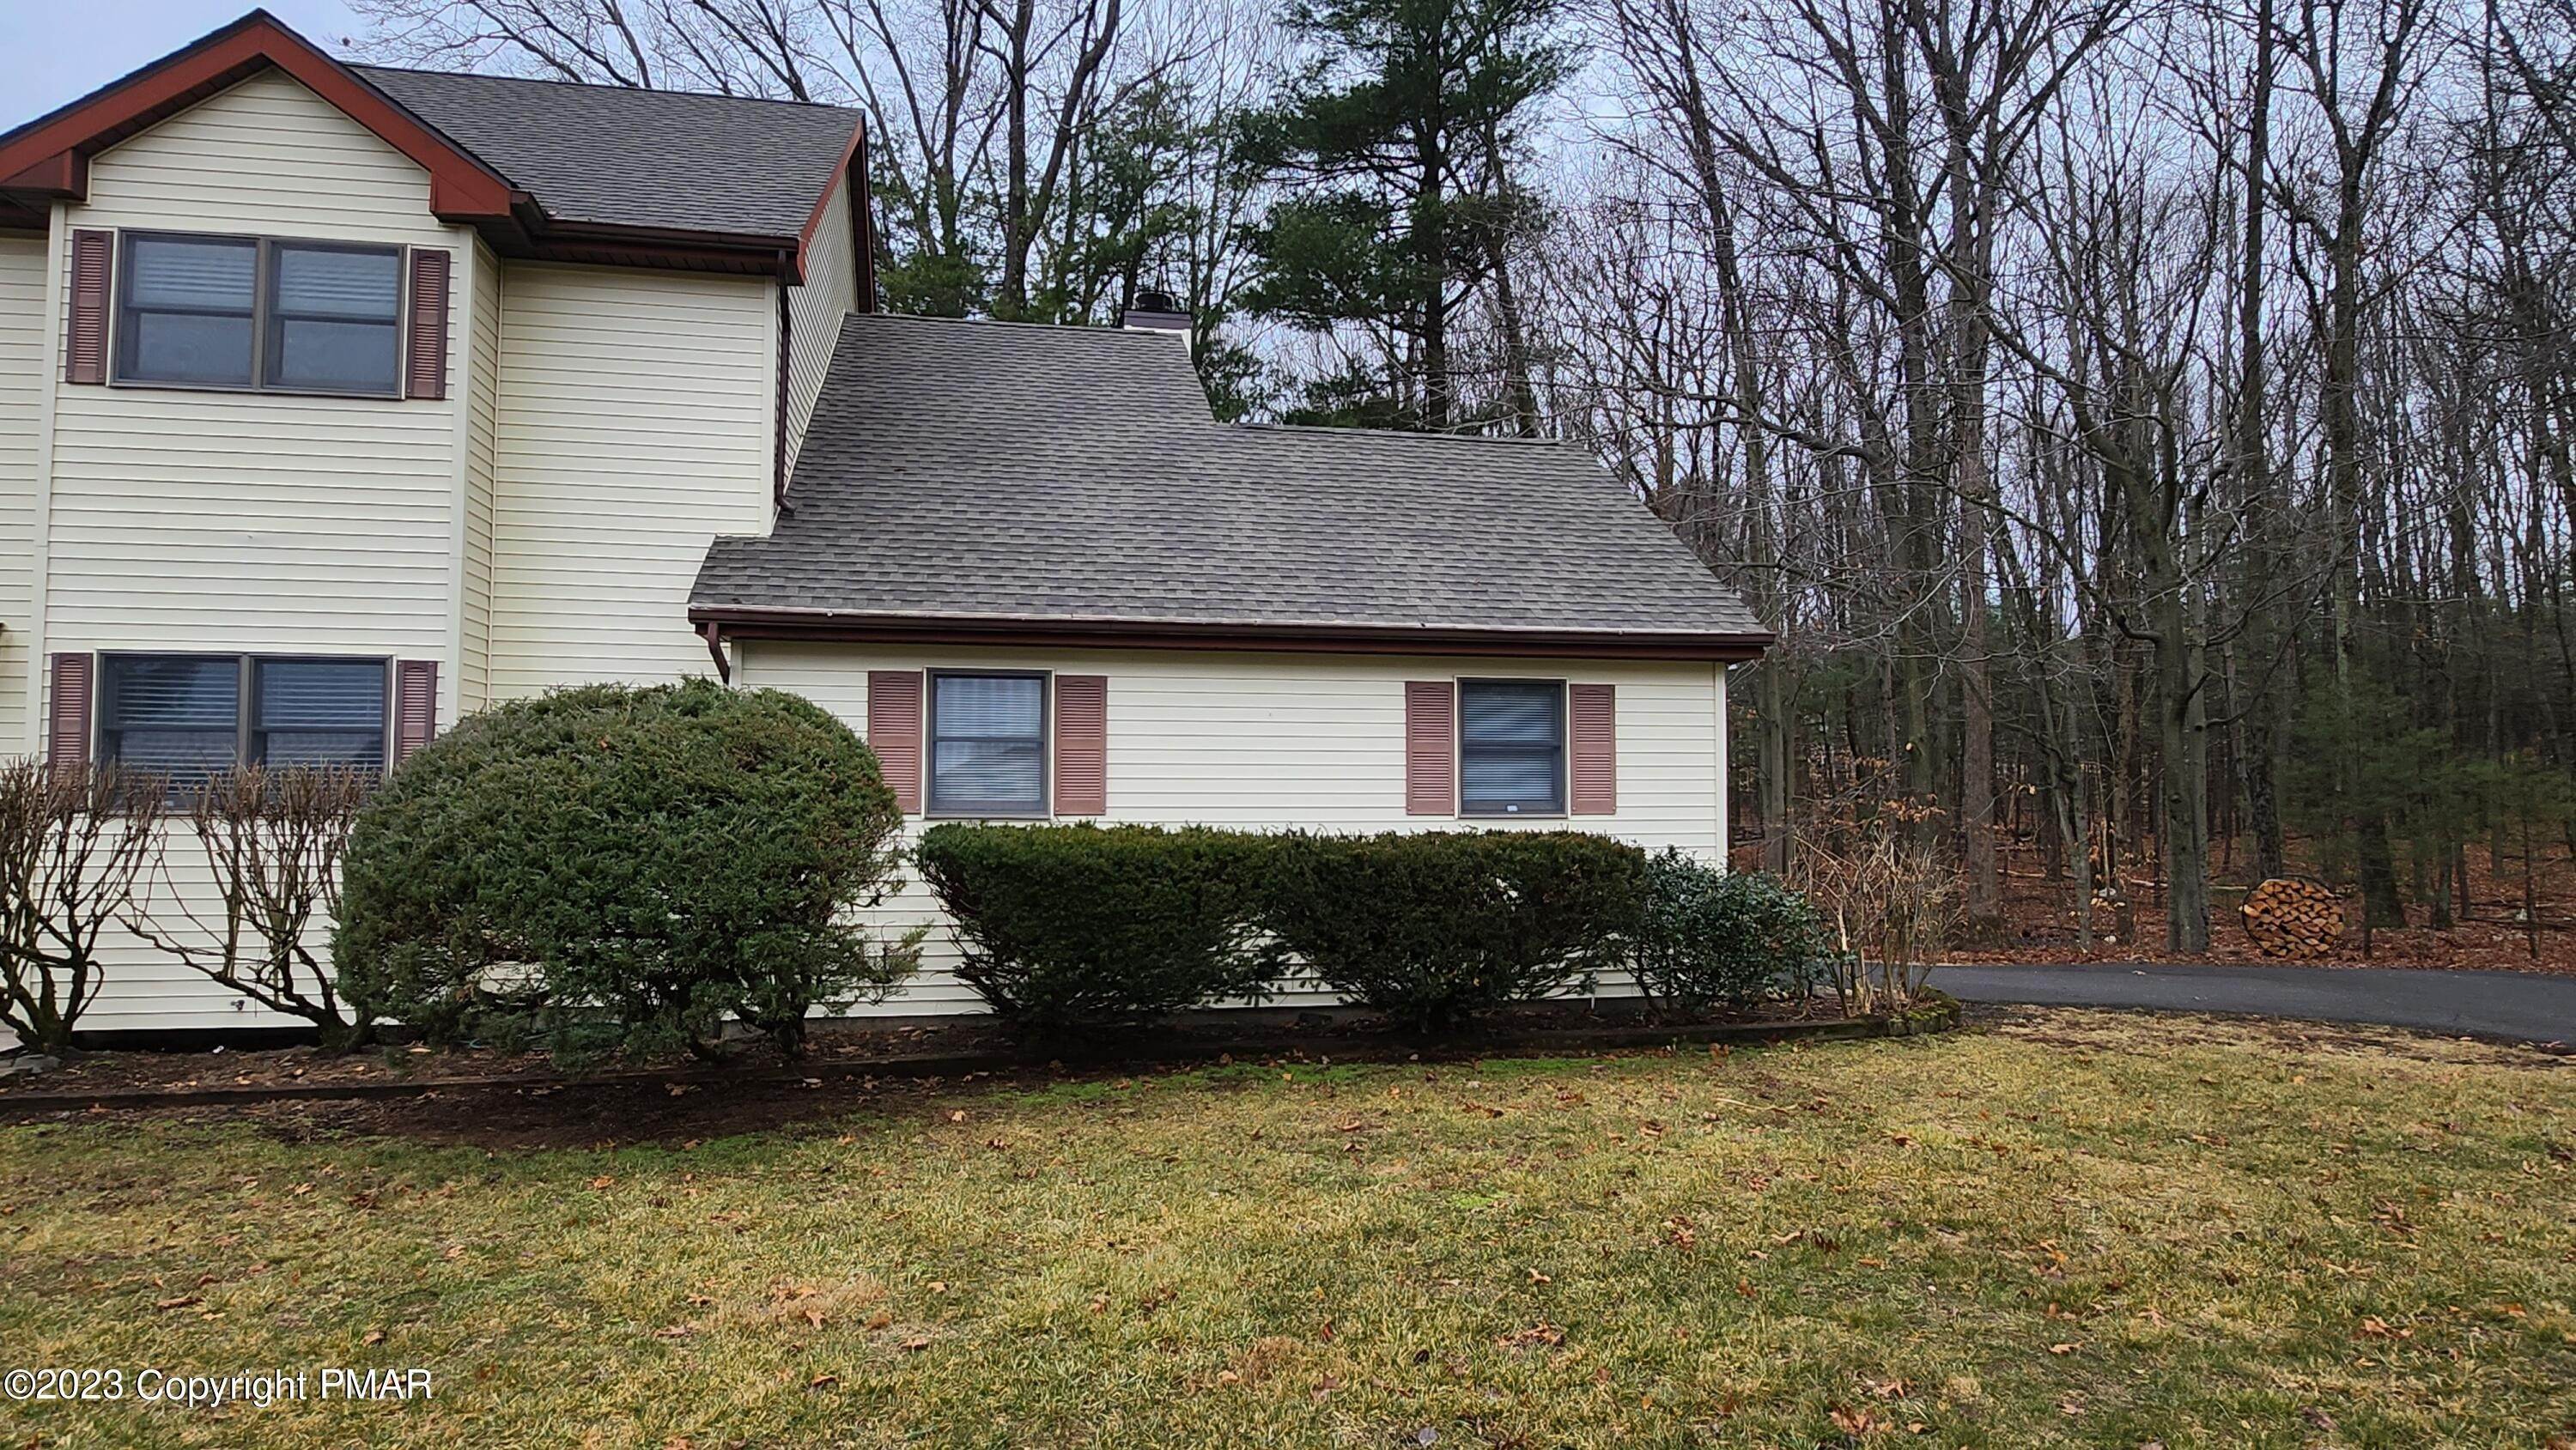 2. Single Family Homes for Sale at 8 Country Glen Lane Effort, Pennsylvania 18330 United States